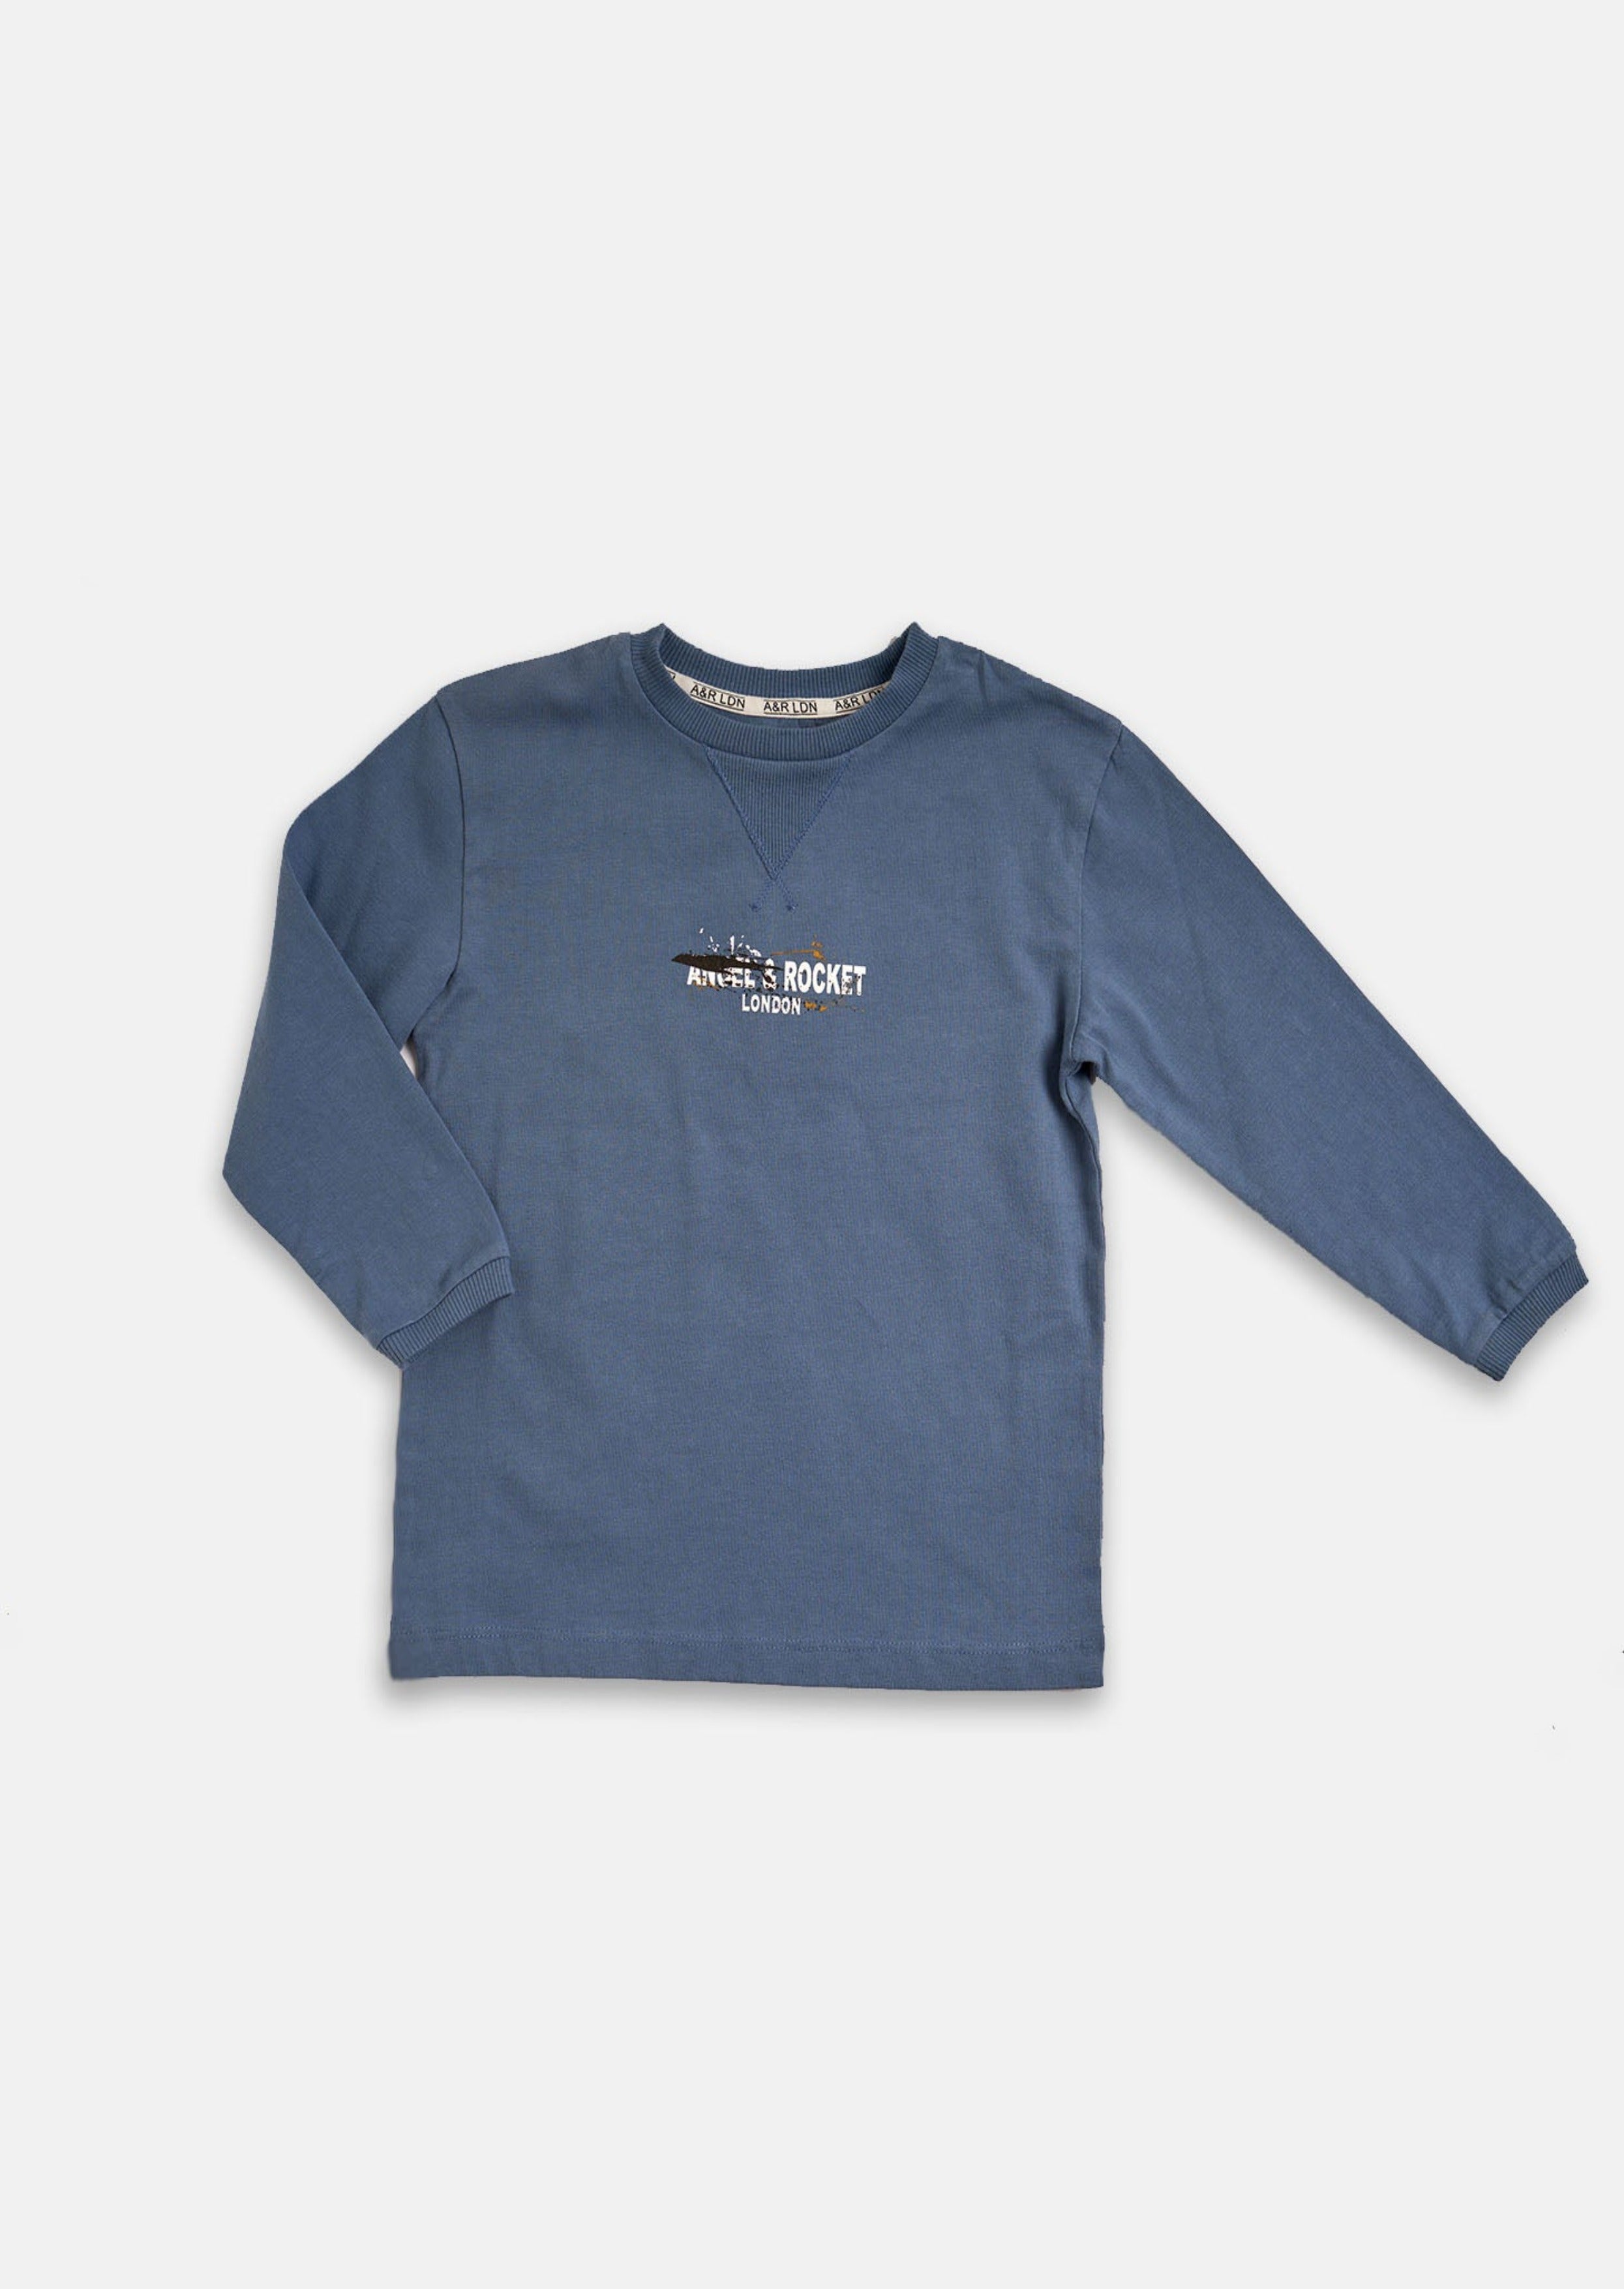 Boys Cotton Solid Blue Sweatshirt